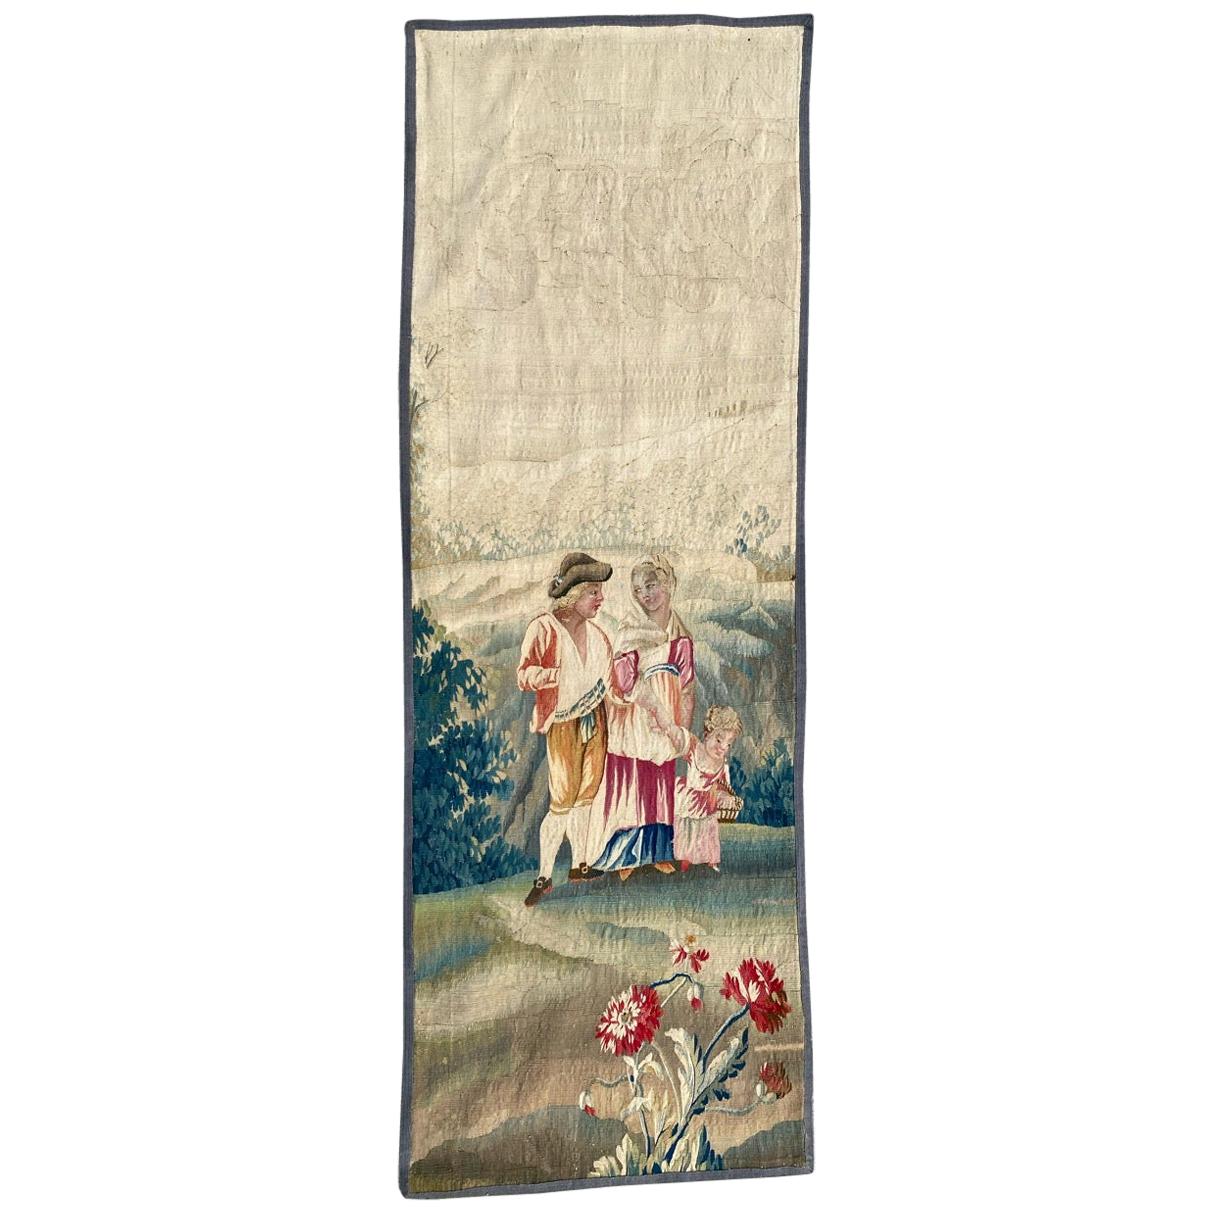 Wonderful 18th Century Aubusson Tapestry Panel